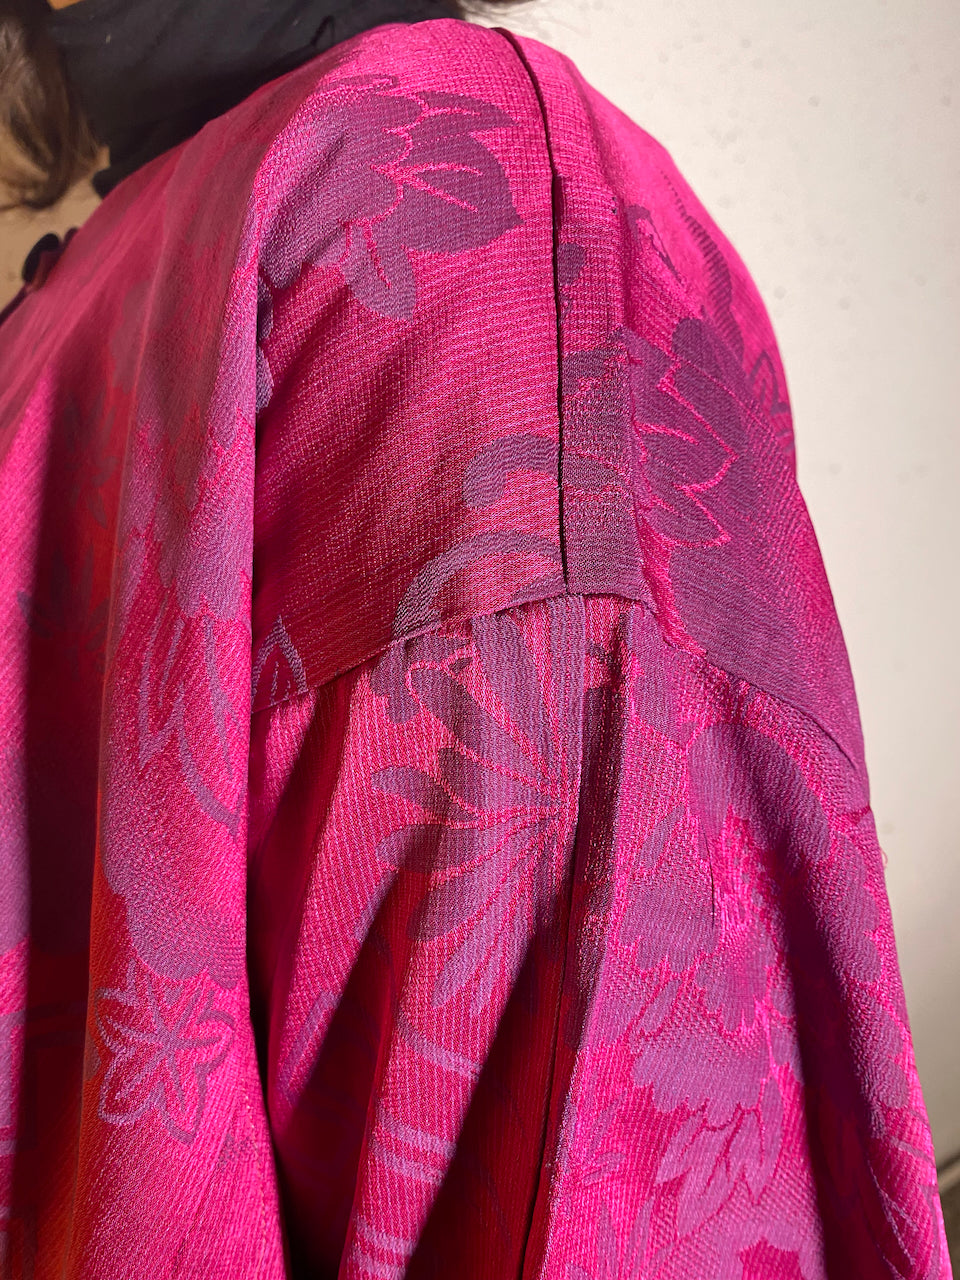 Flower-patterned dress jacket